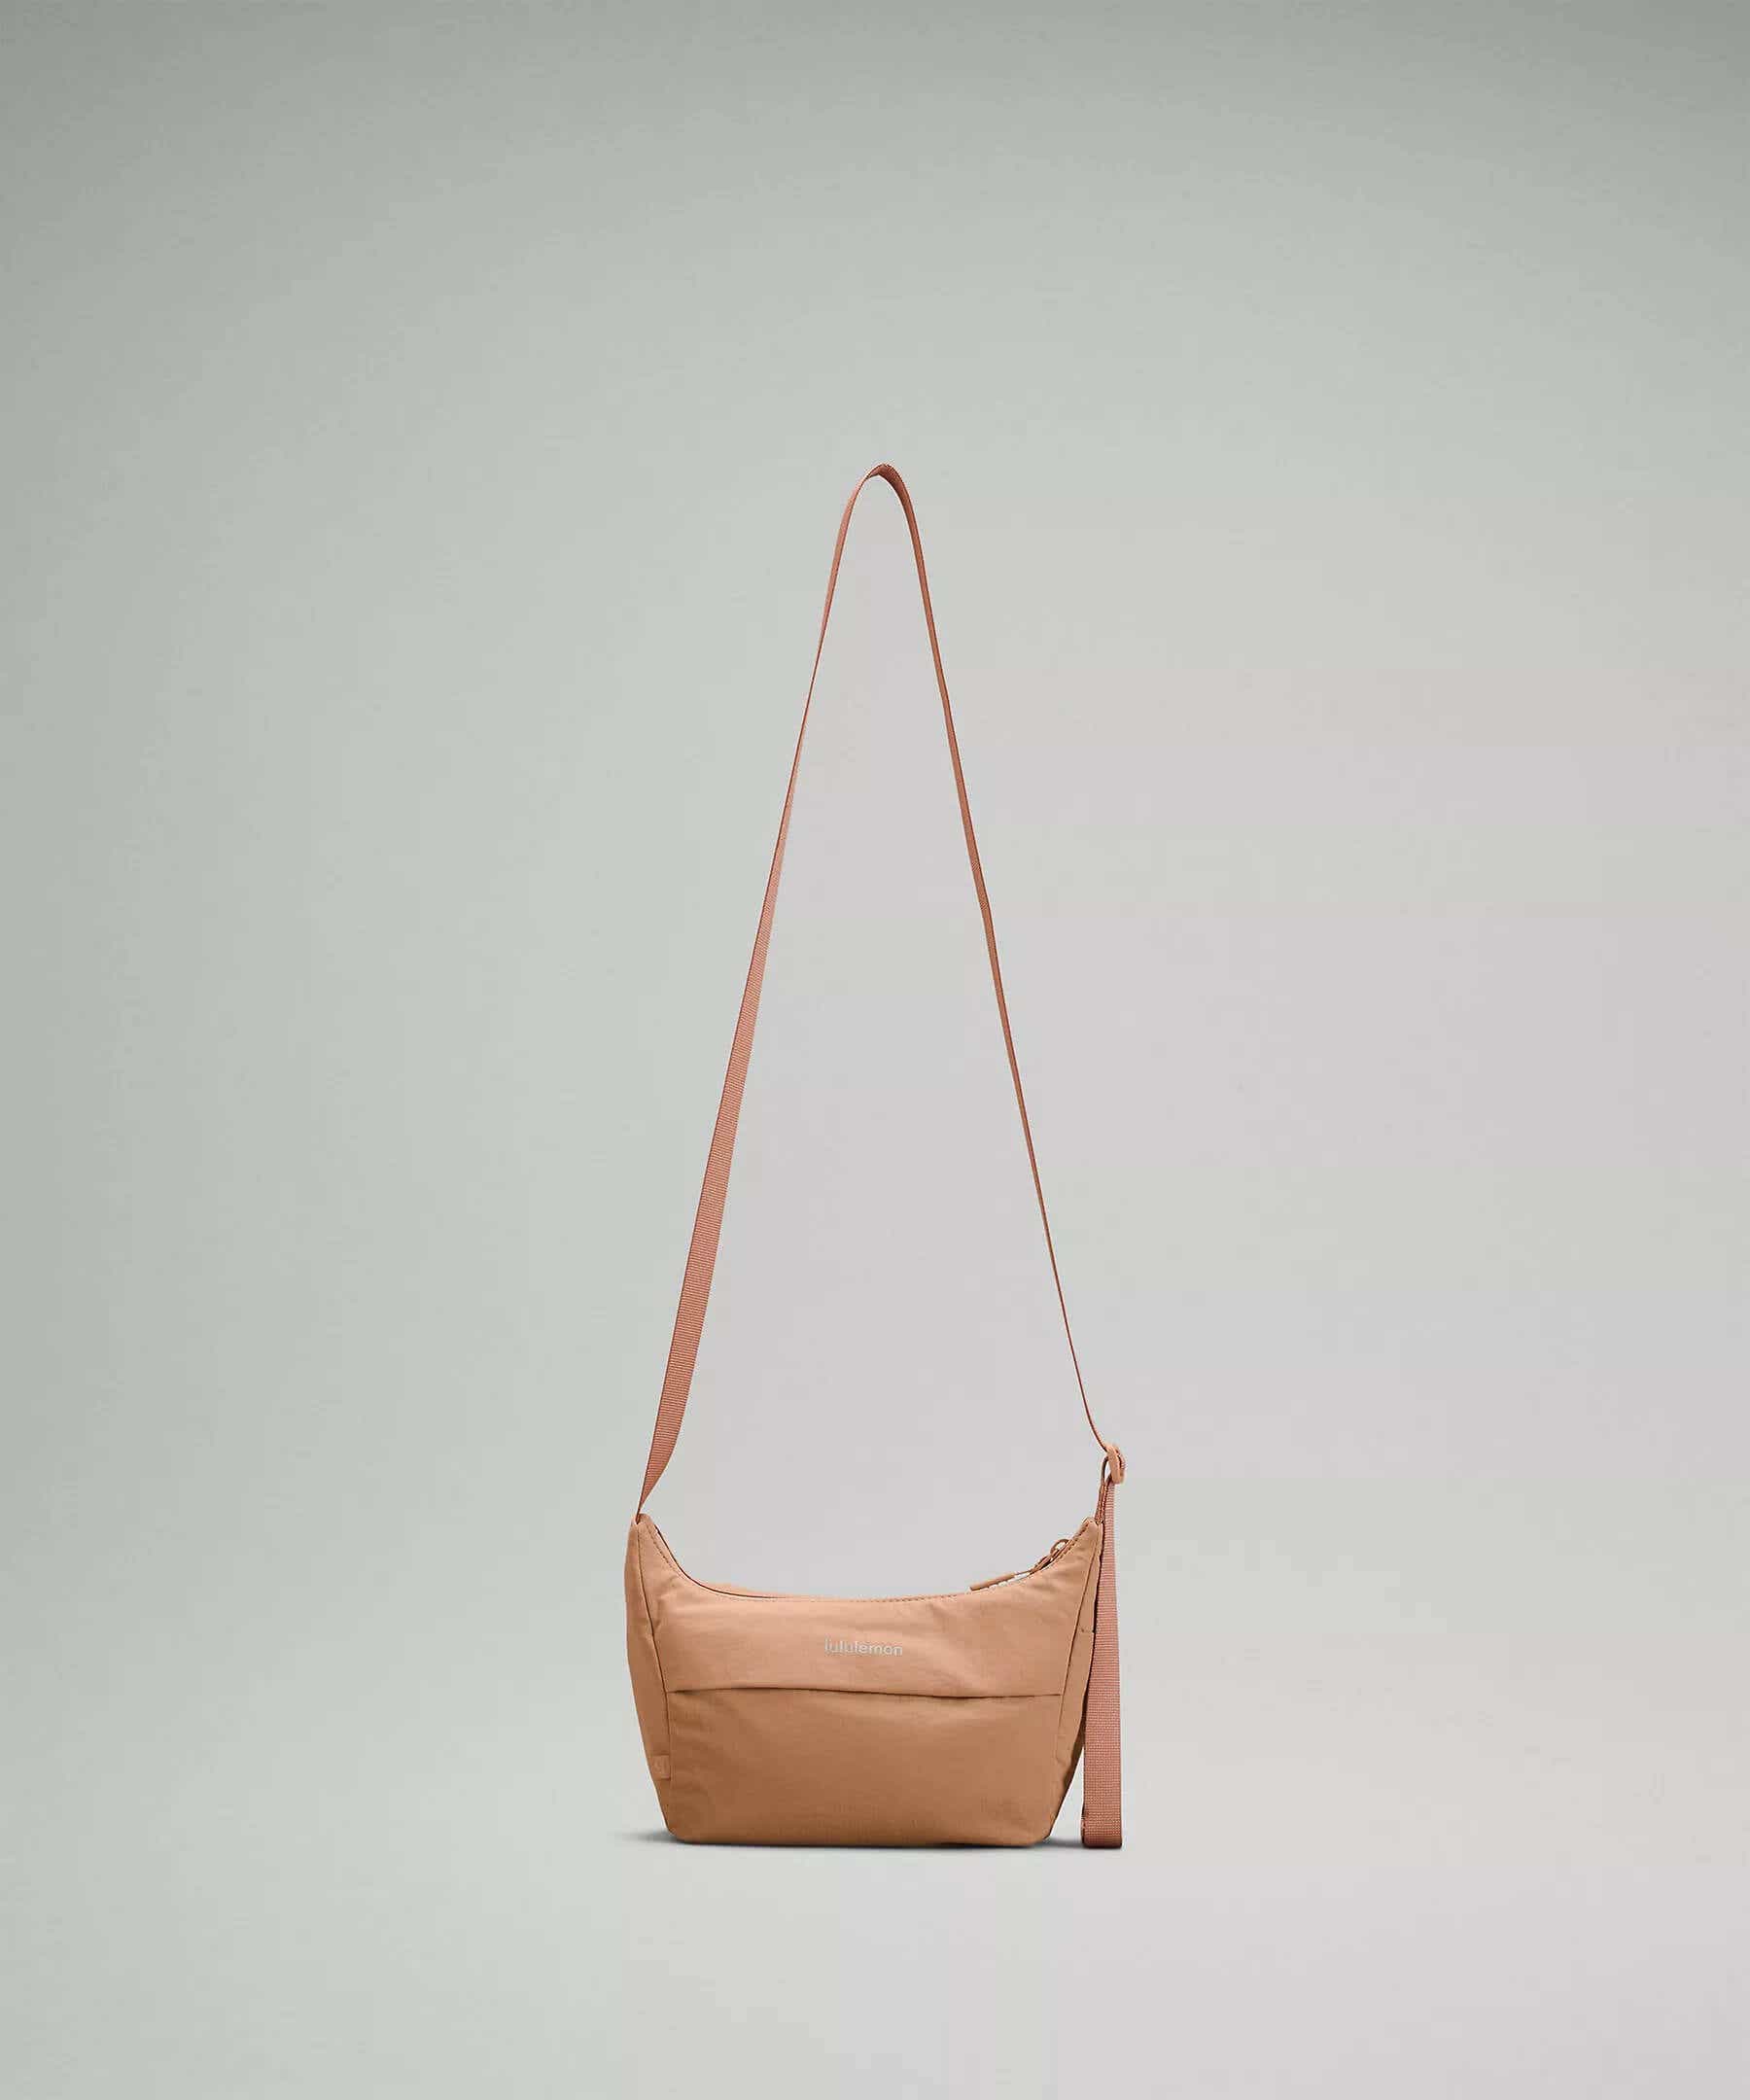 lululemon sling bag